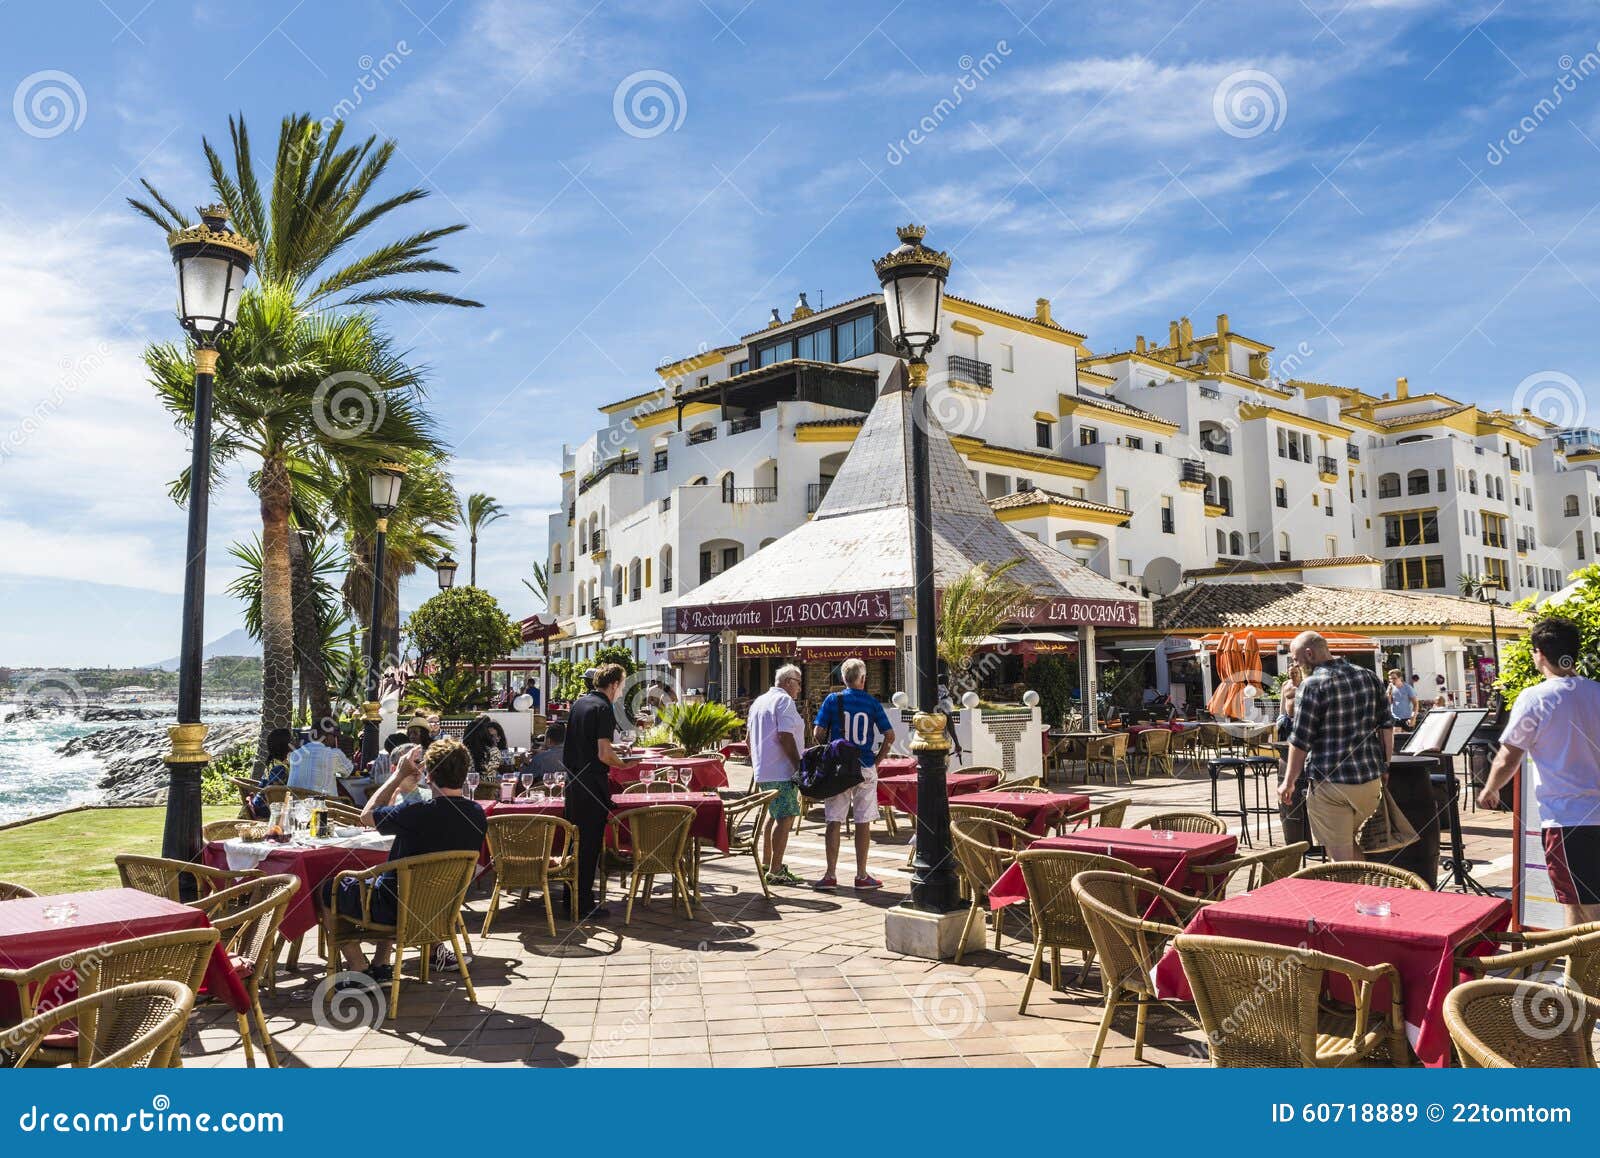 Da Paulo restaurant Bar at Puerto Banus Marbella Spain Stock Photo - Alamy